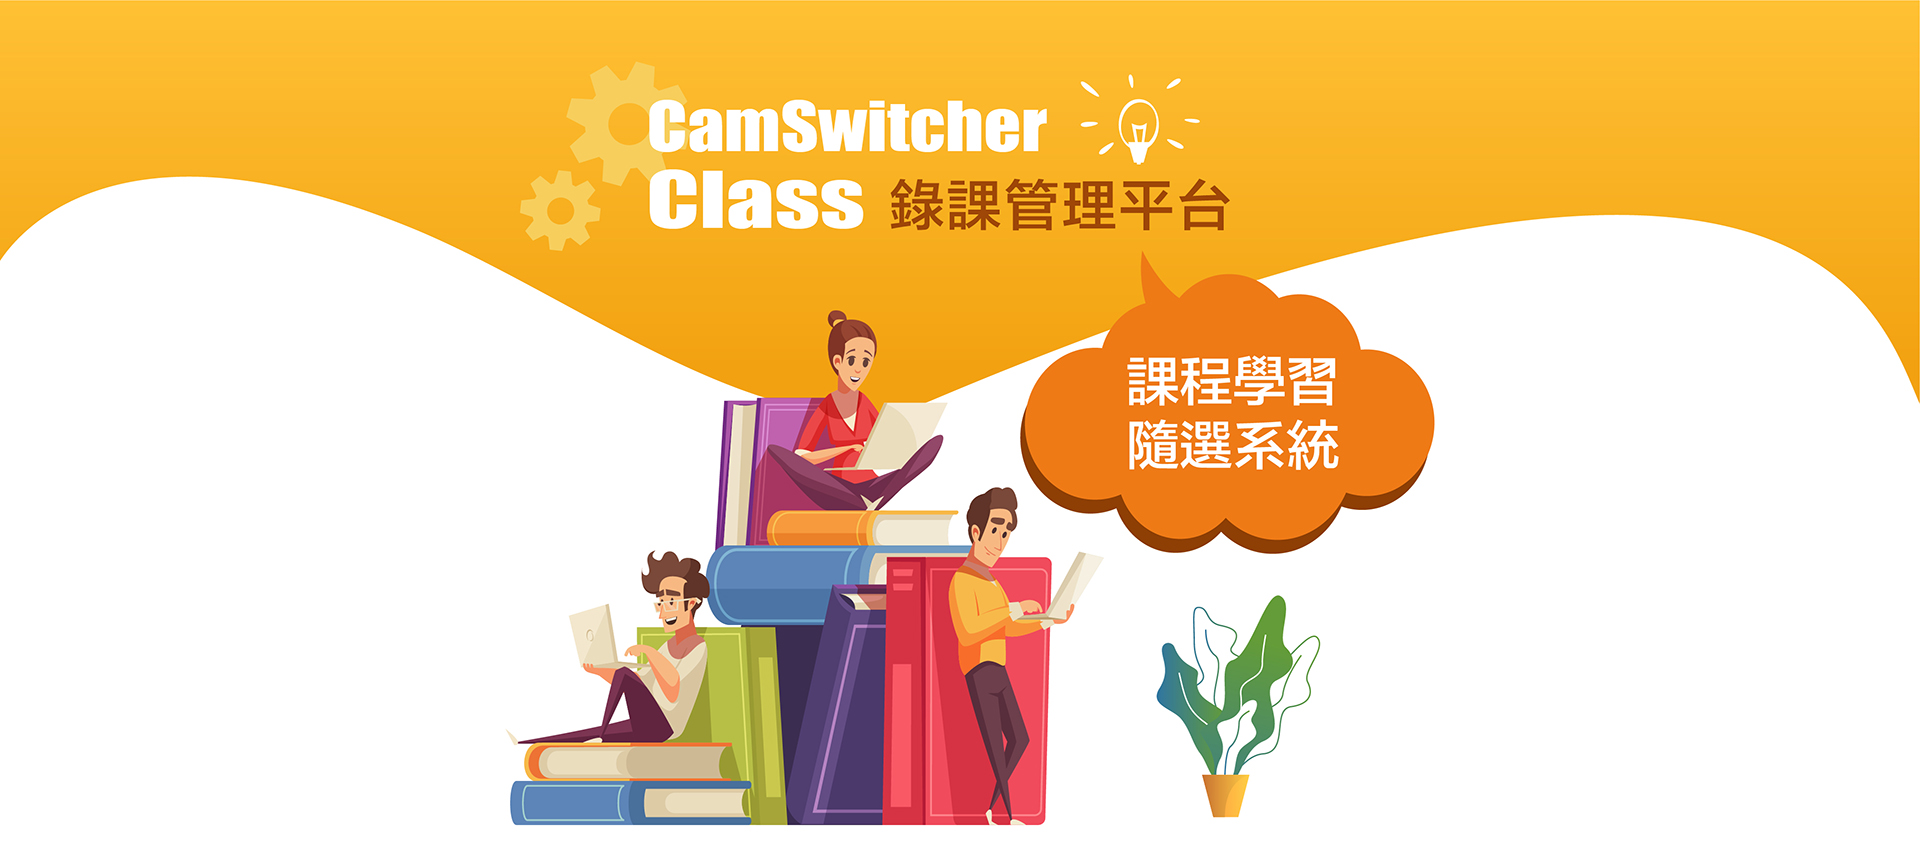 CamSwitcherClass 錄課管理平台-課程隨選系統